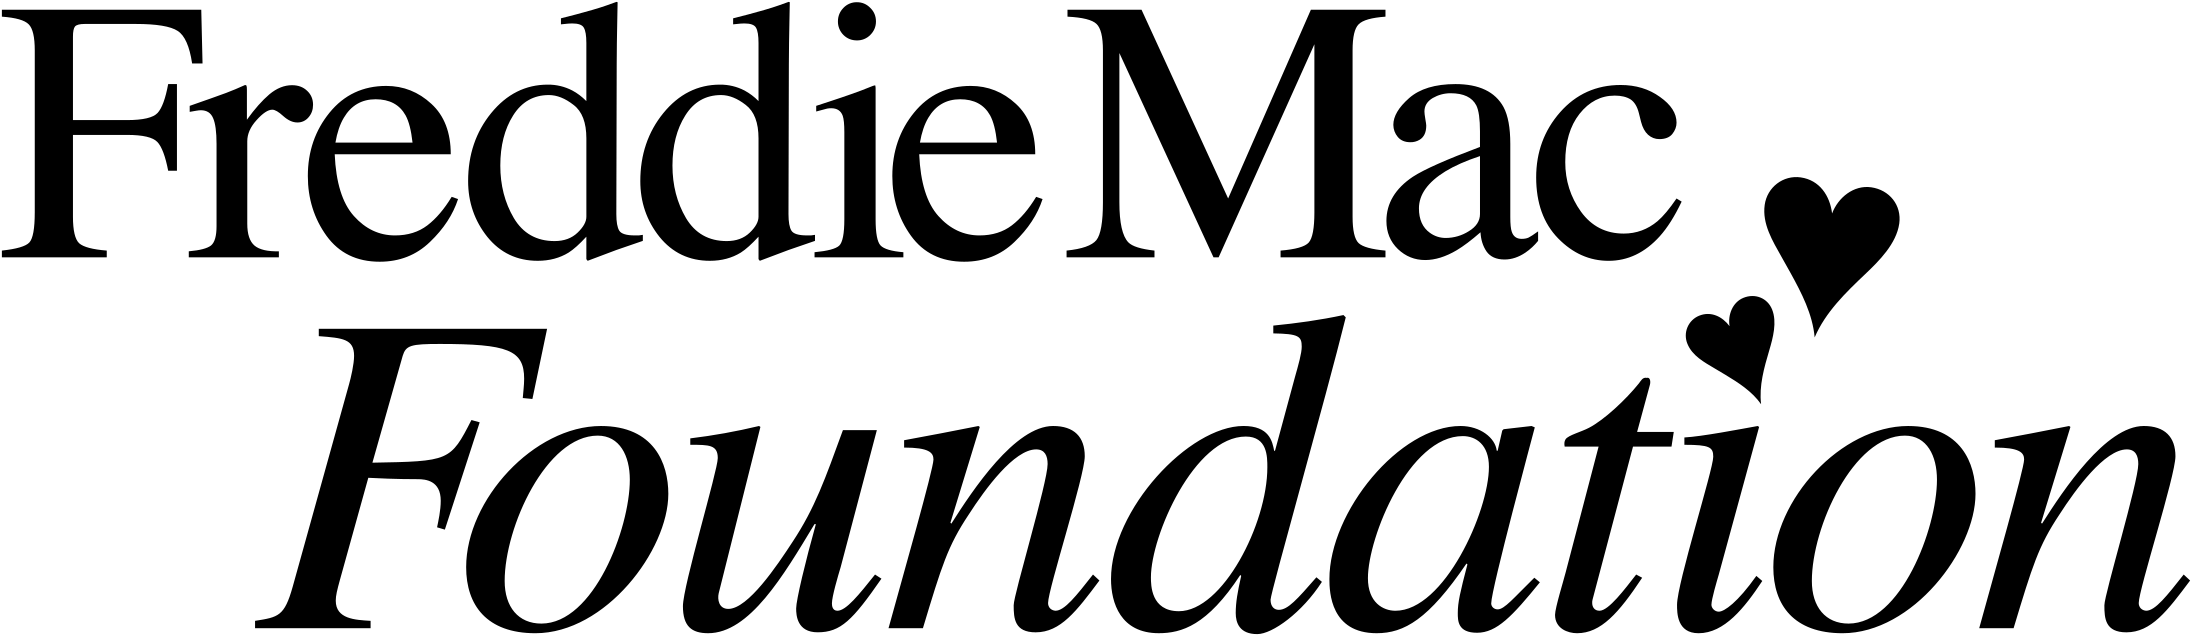 Freddie Mac Foundation Logo Png Transparent - Freddie Mac Clipart (2400x2400), Png Download